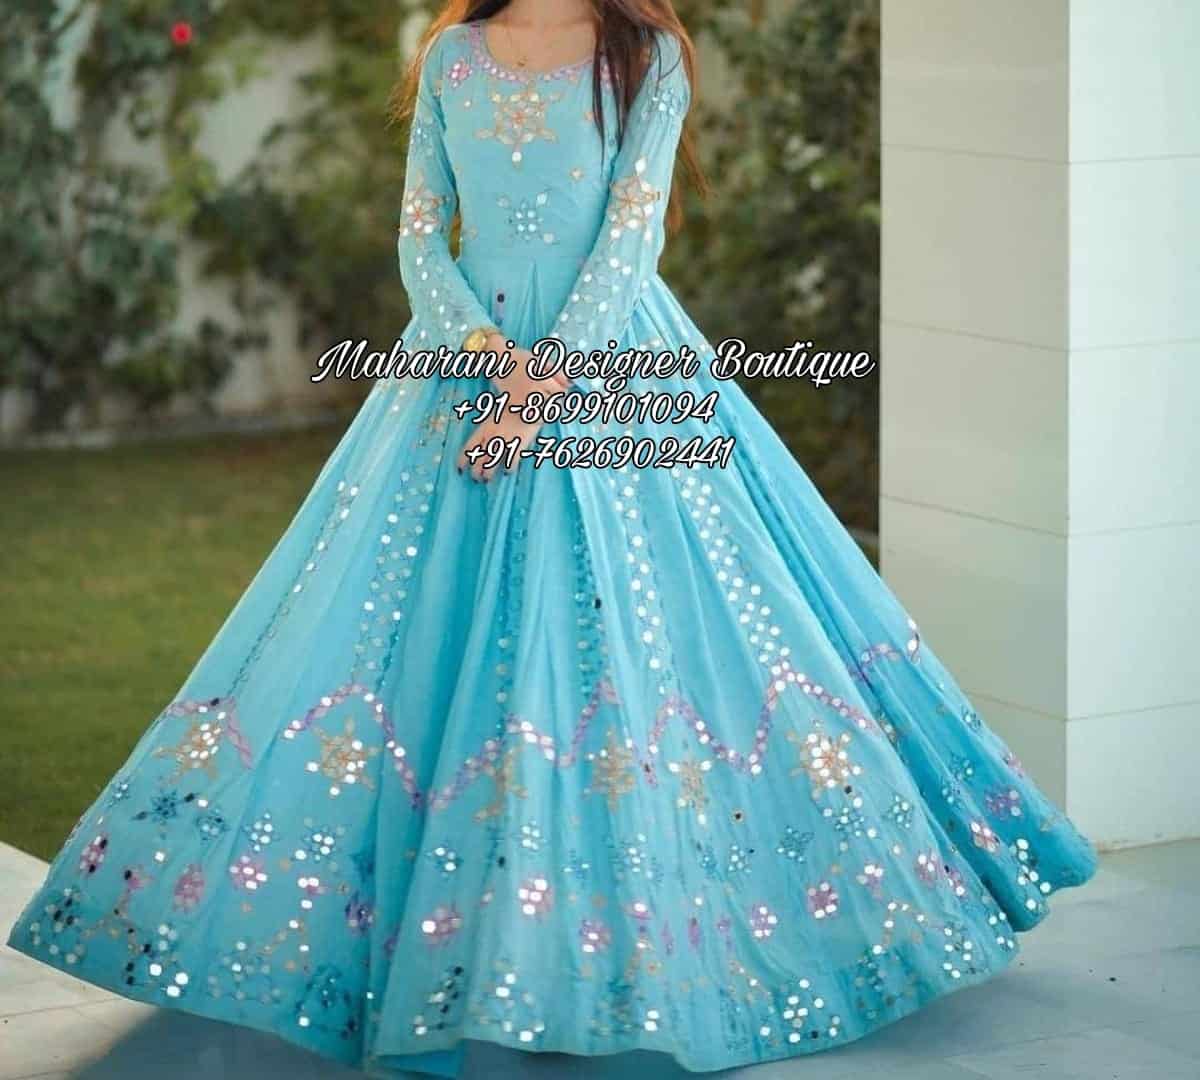 https://maharanidesigner.com/wp-content/uploads/2021/03/Designer-Boutique-Dresses-Online.jpg